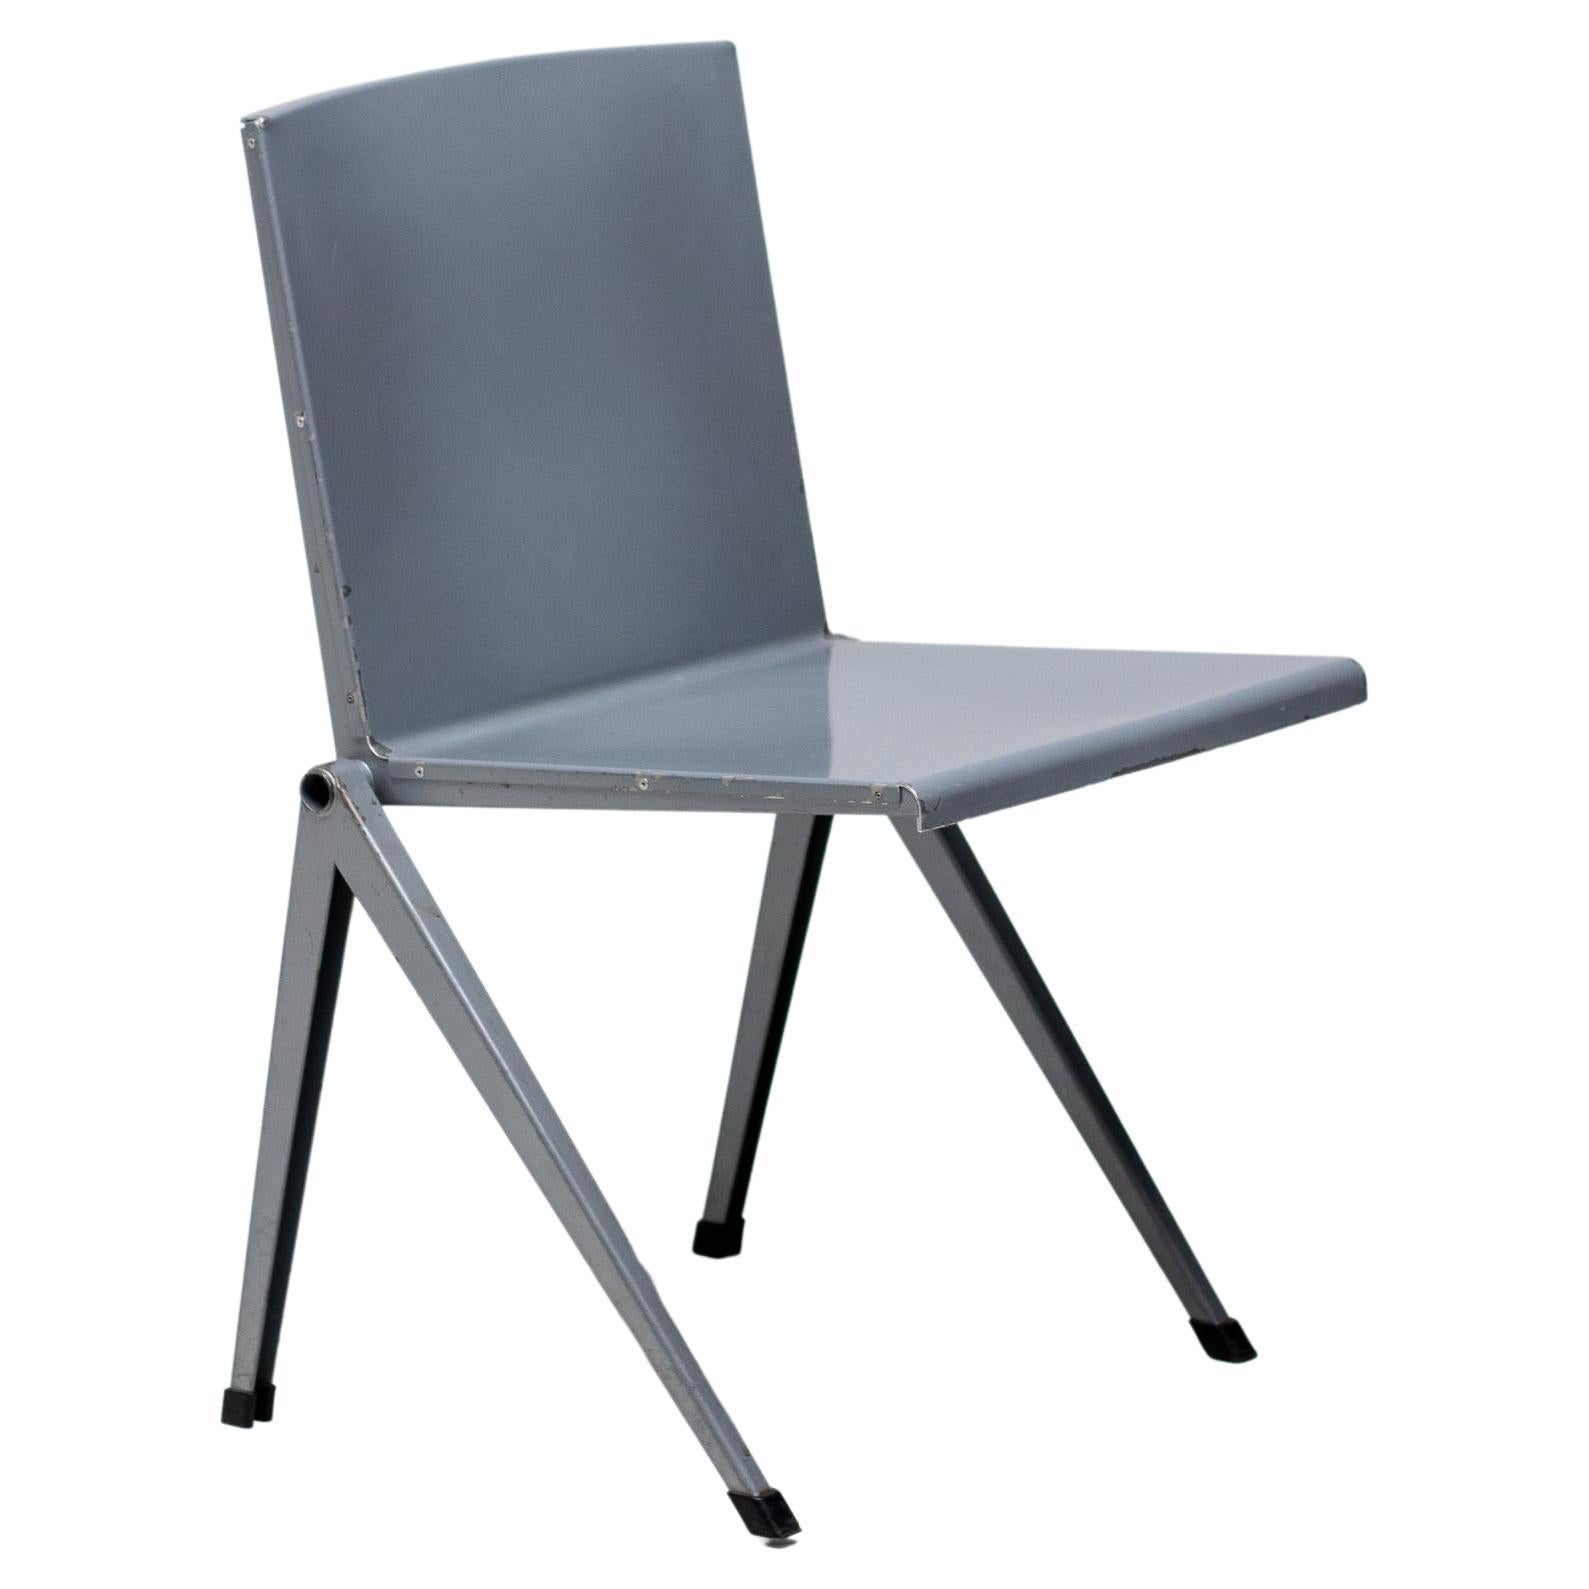 Gerrit Rietveld Mondial Chair For Sale